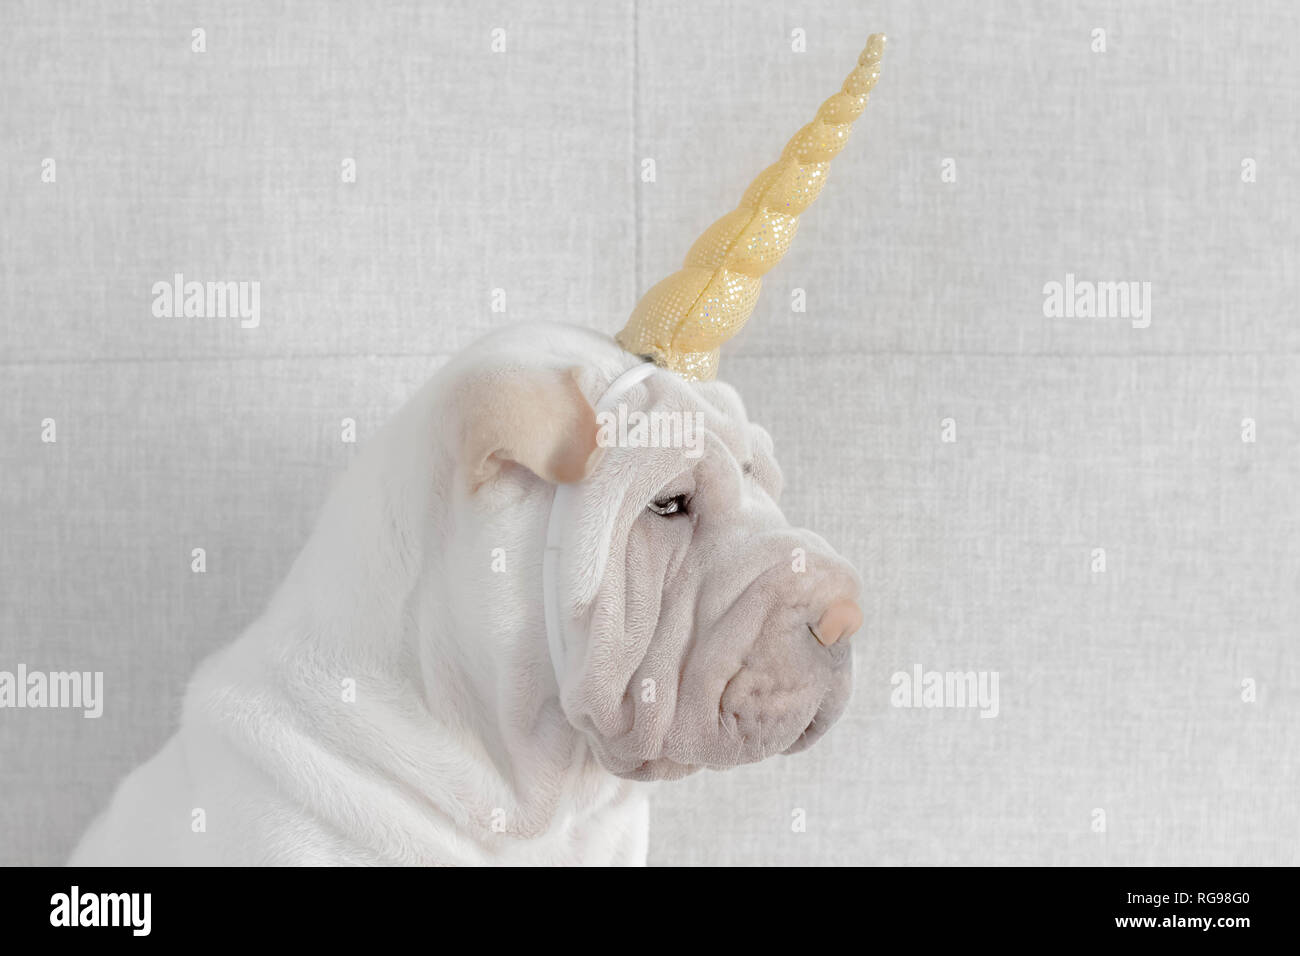 Shar pei puppy dog with unicorn horn headband Stock Photo